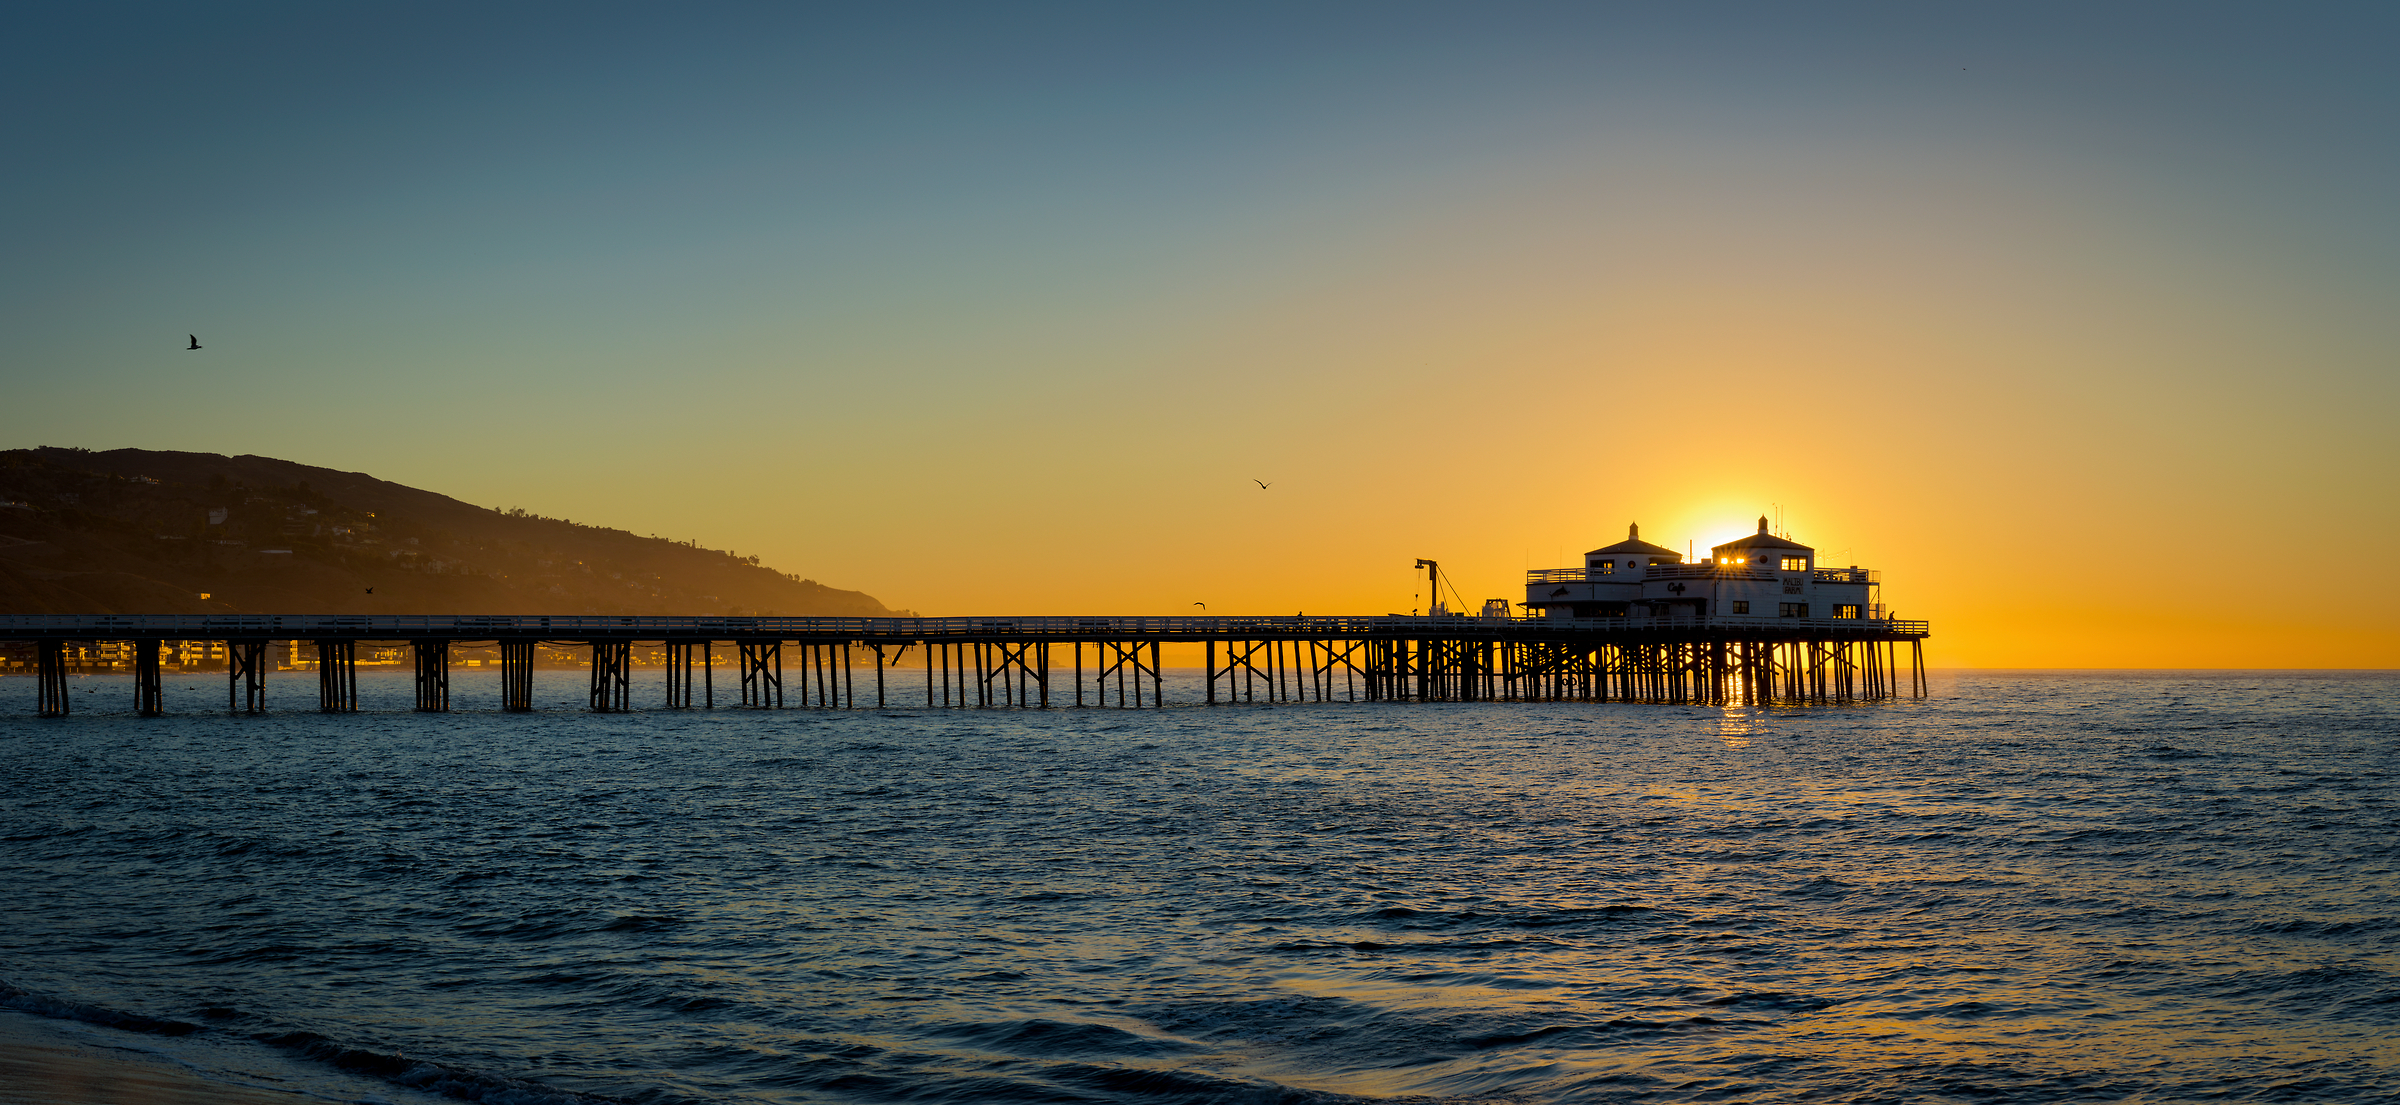 112 megapixels! A very high resolution, large-format VAST photo of the Malibu Pier at sunrise created by Jim Tarpo in Malibu, California.